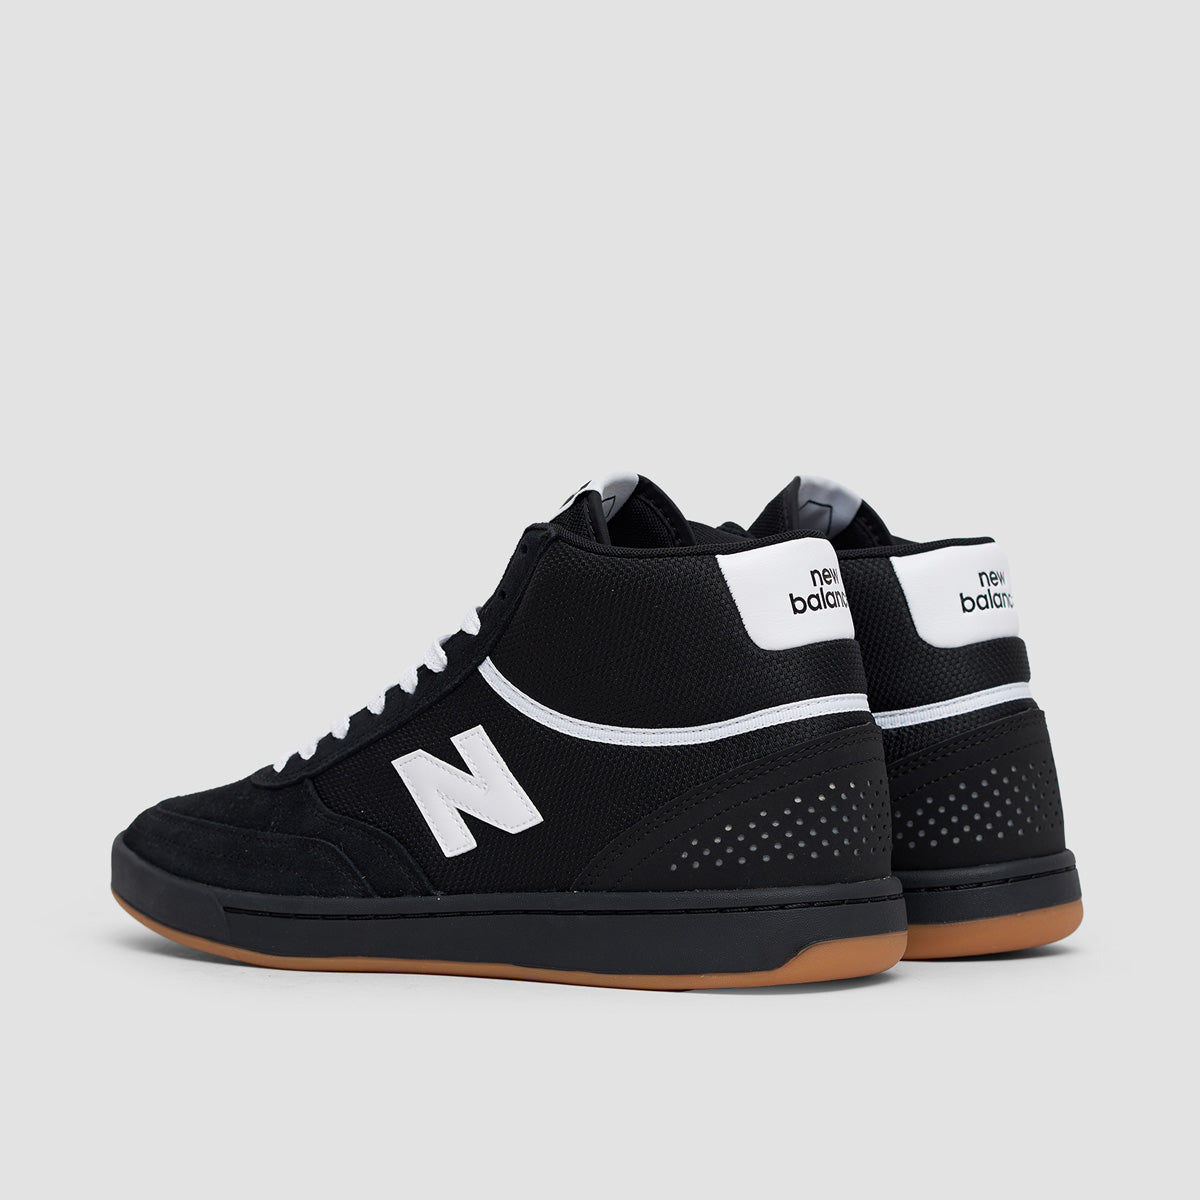 New Balance Numeric 440 High Shoes - Black/White